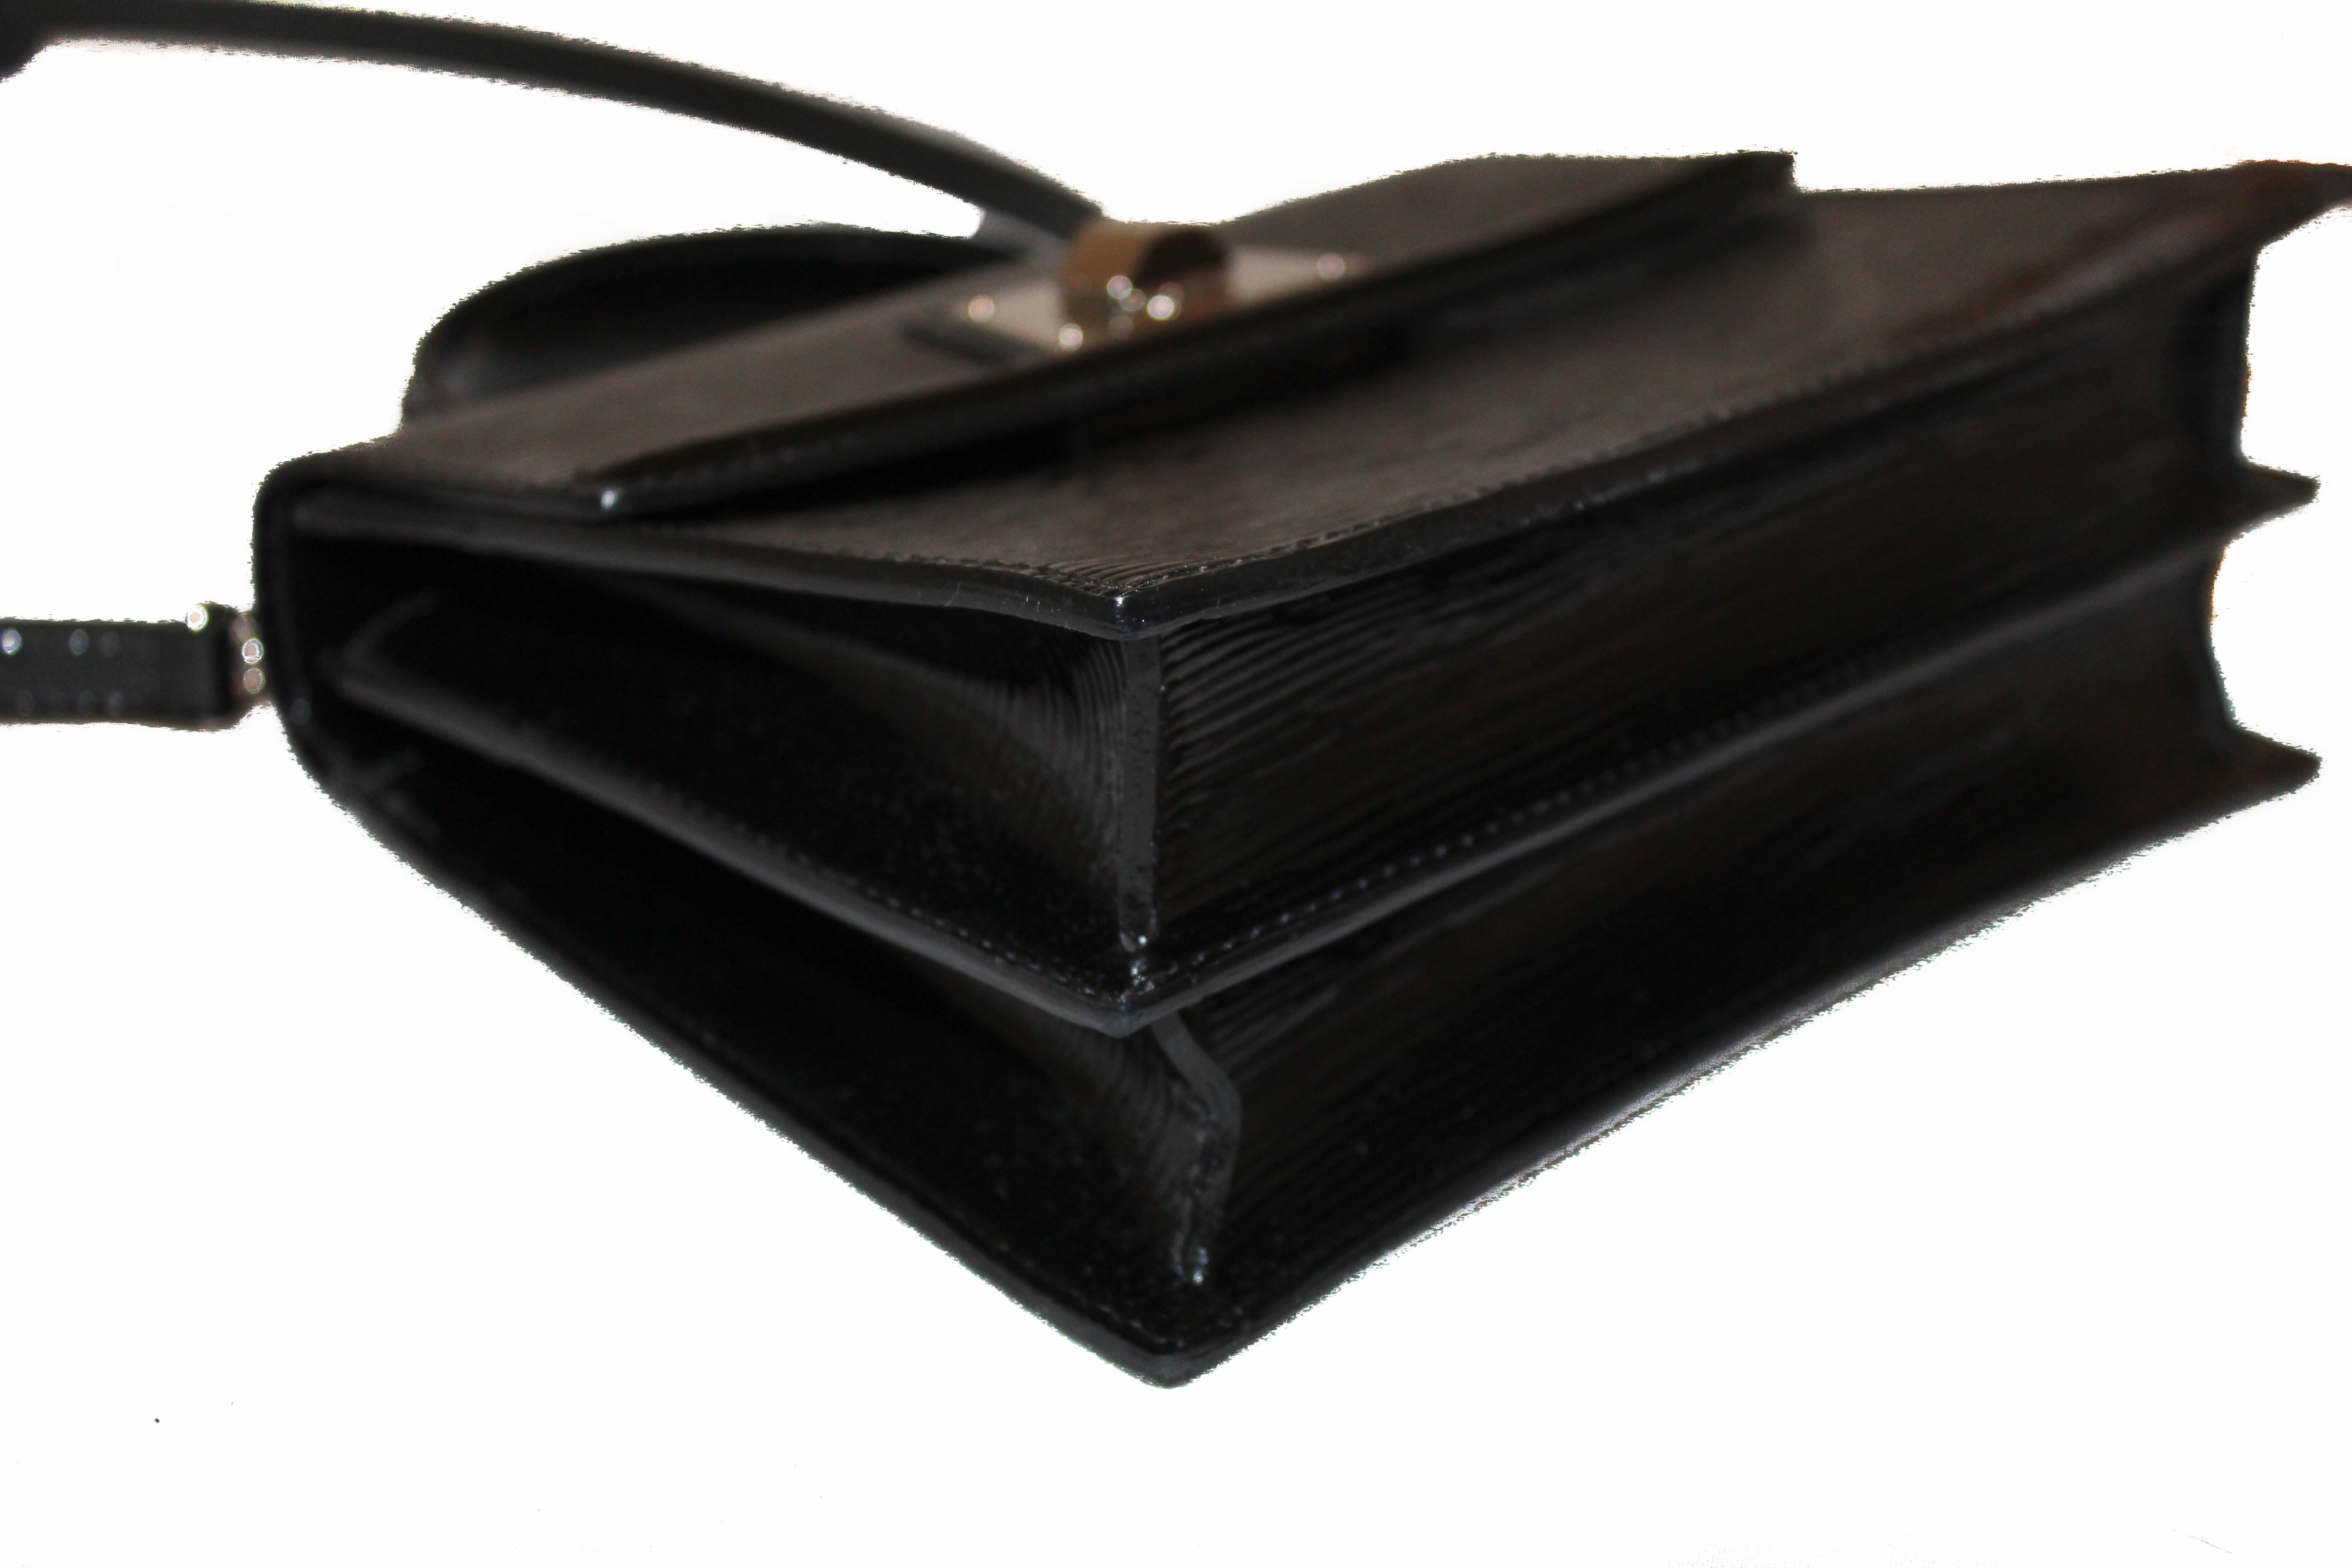 Louis Vuitton Black Electric Epi Leather Sevigne GM Bag at 1stDibs